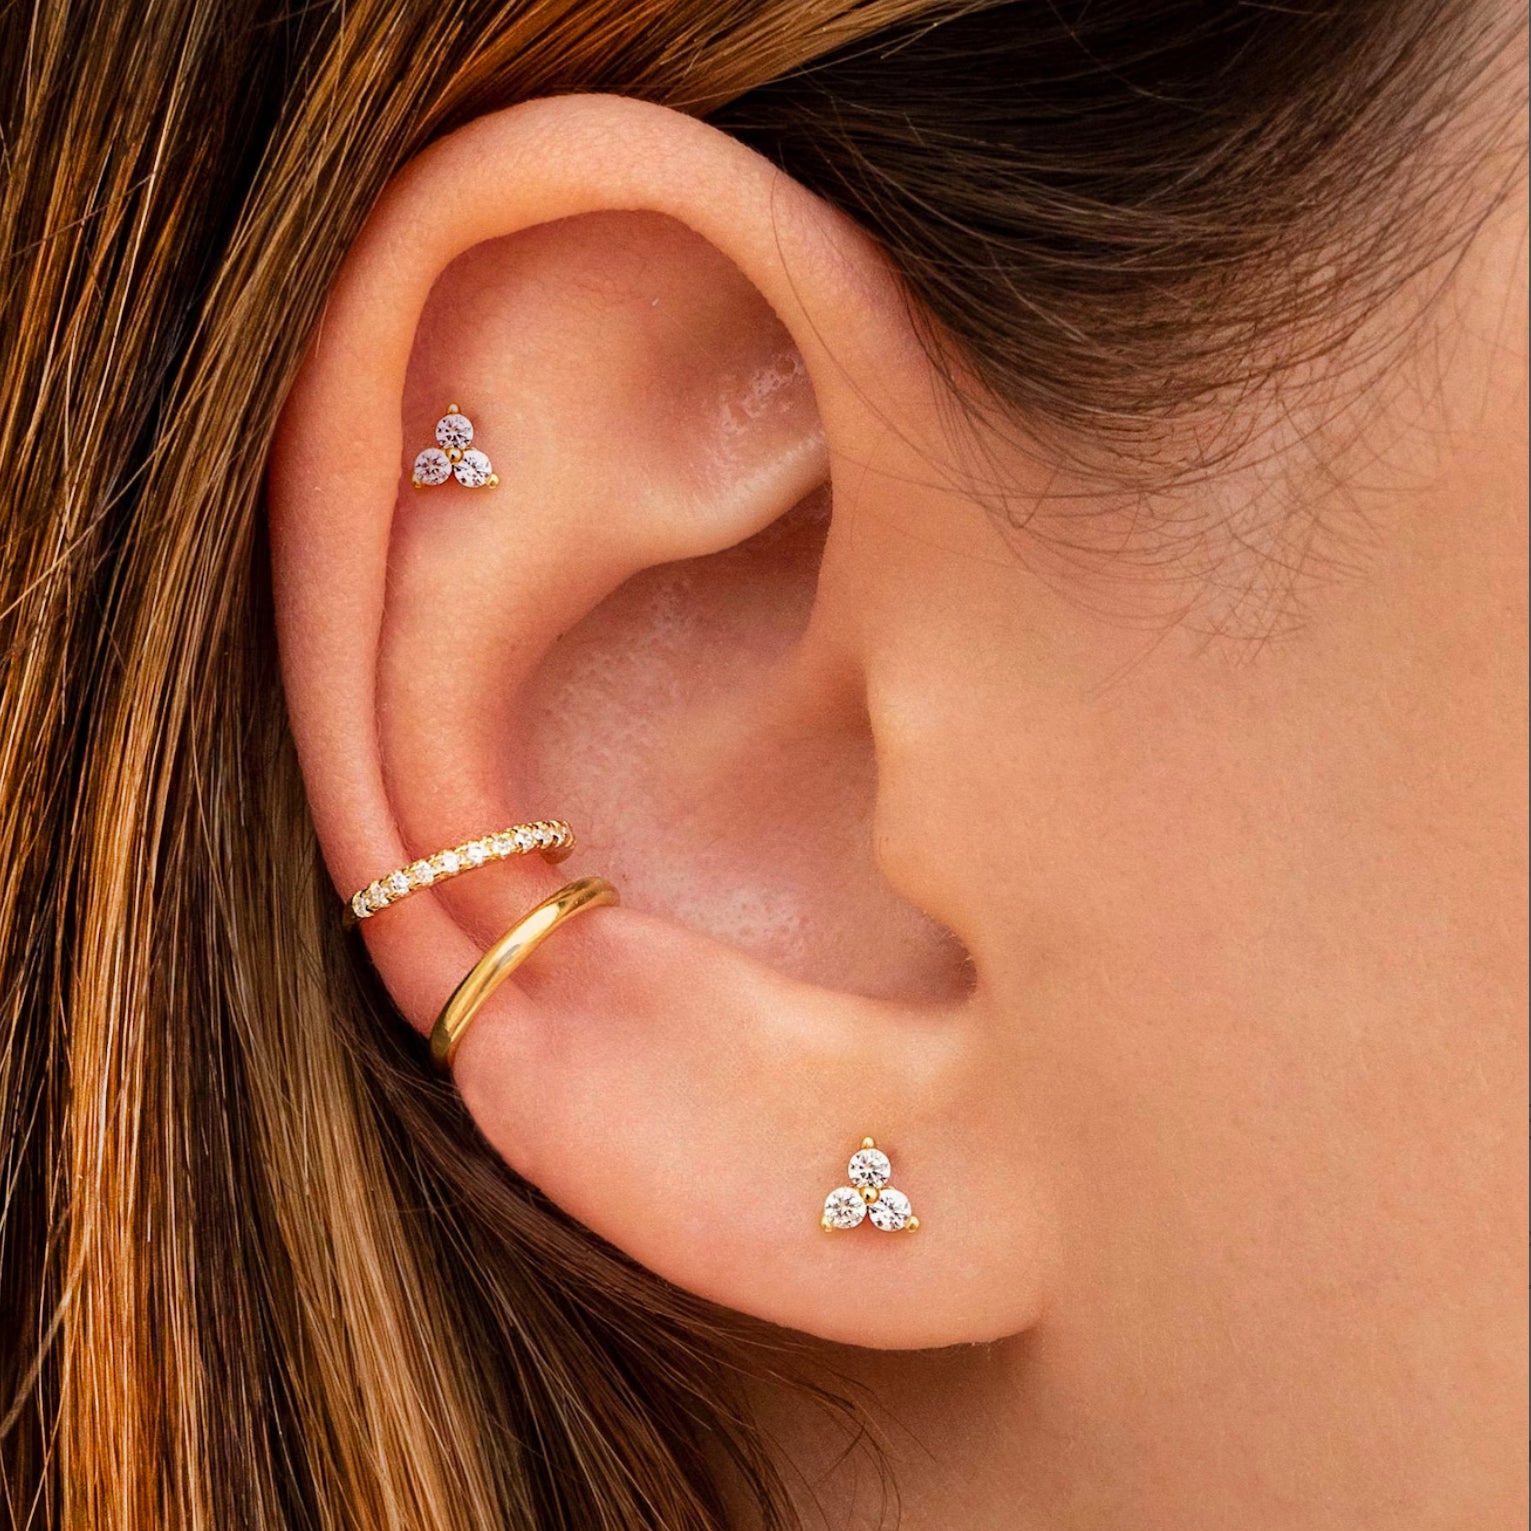 Silver ear stud with 3 gems